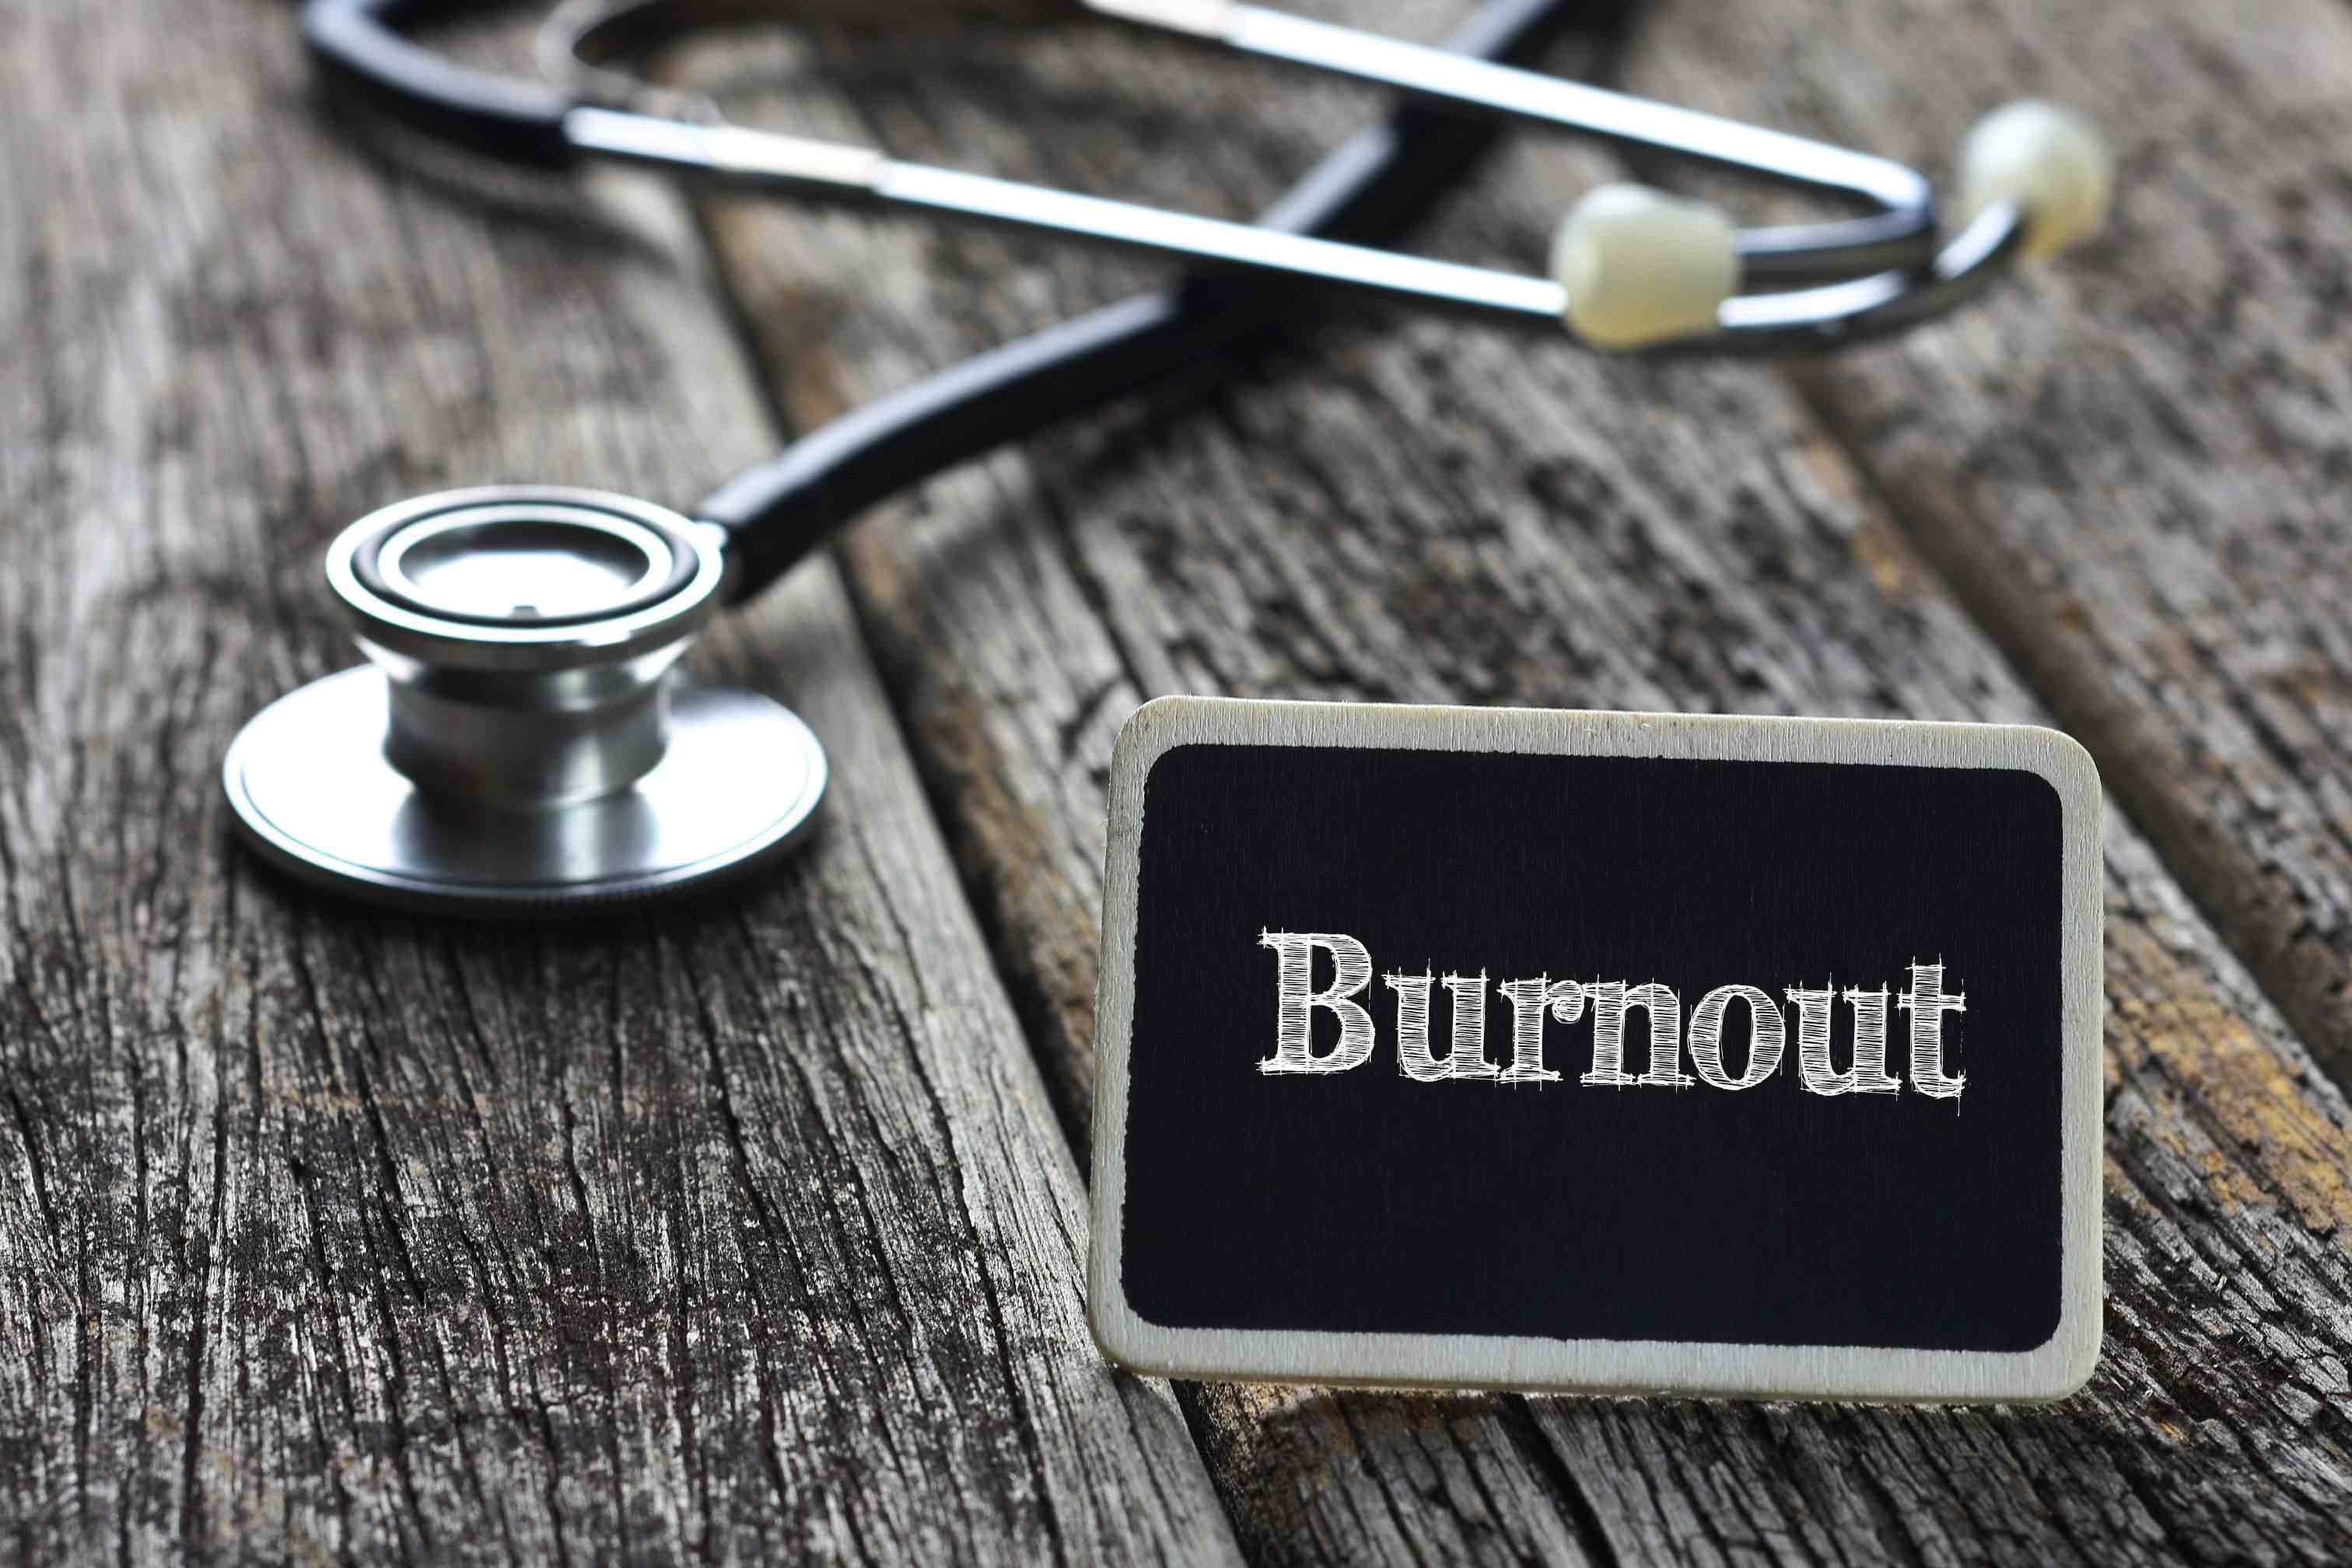 Tackling Physician Burnout During a Pandemic